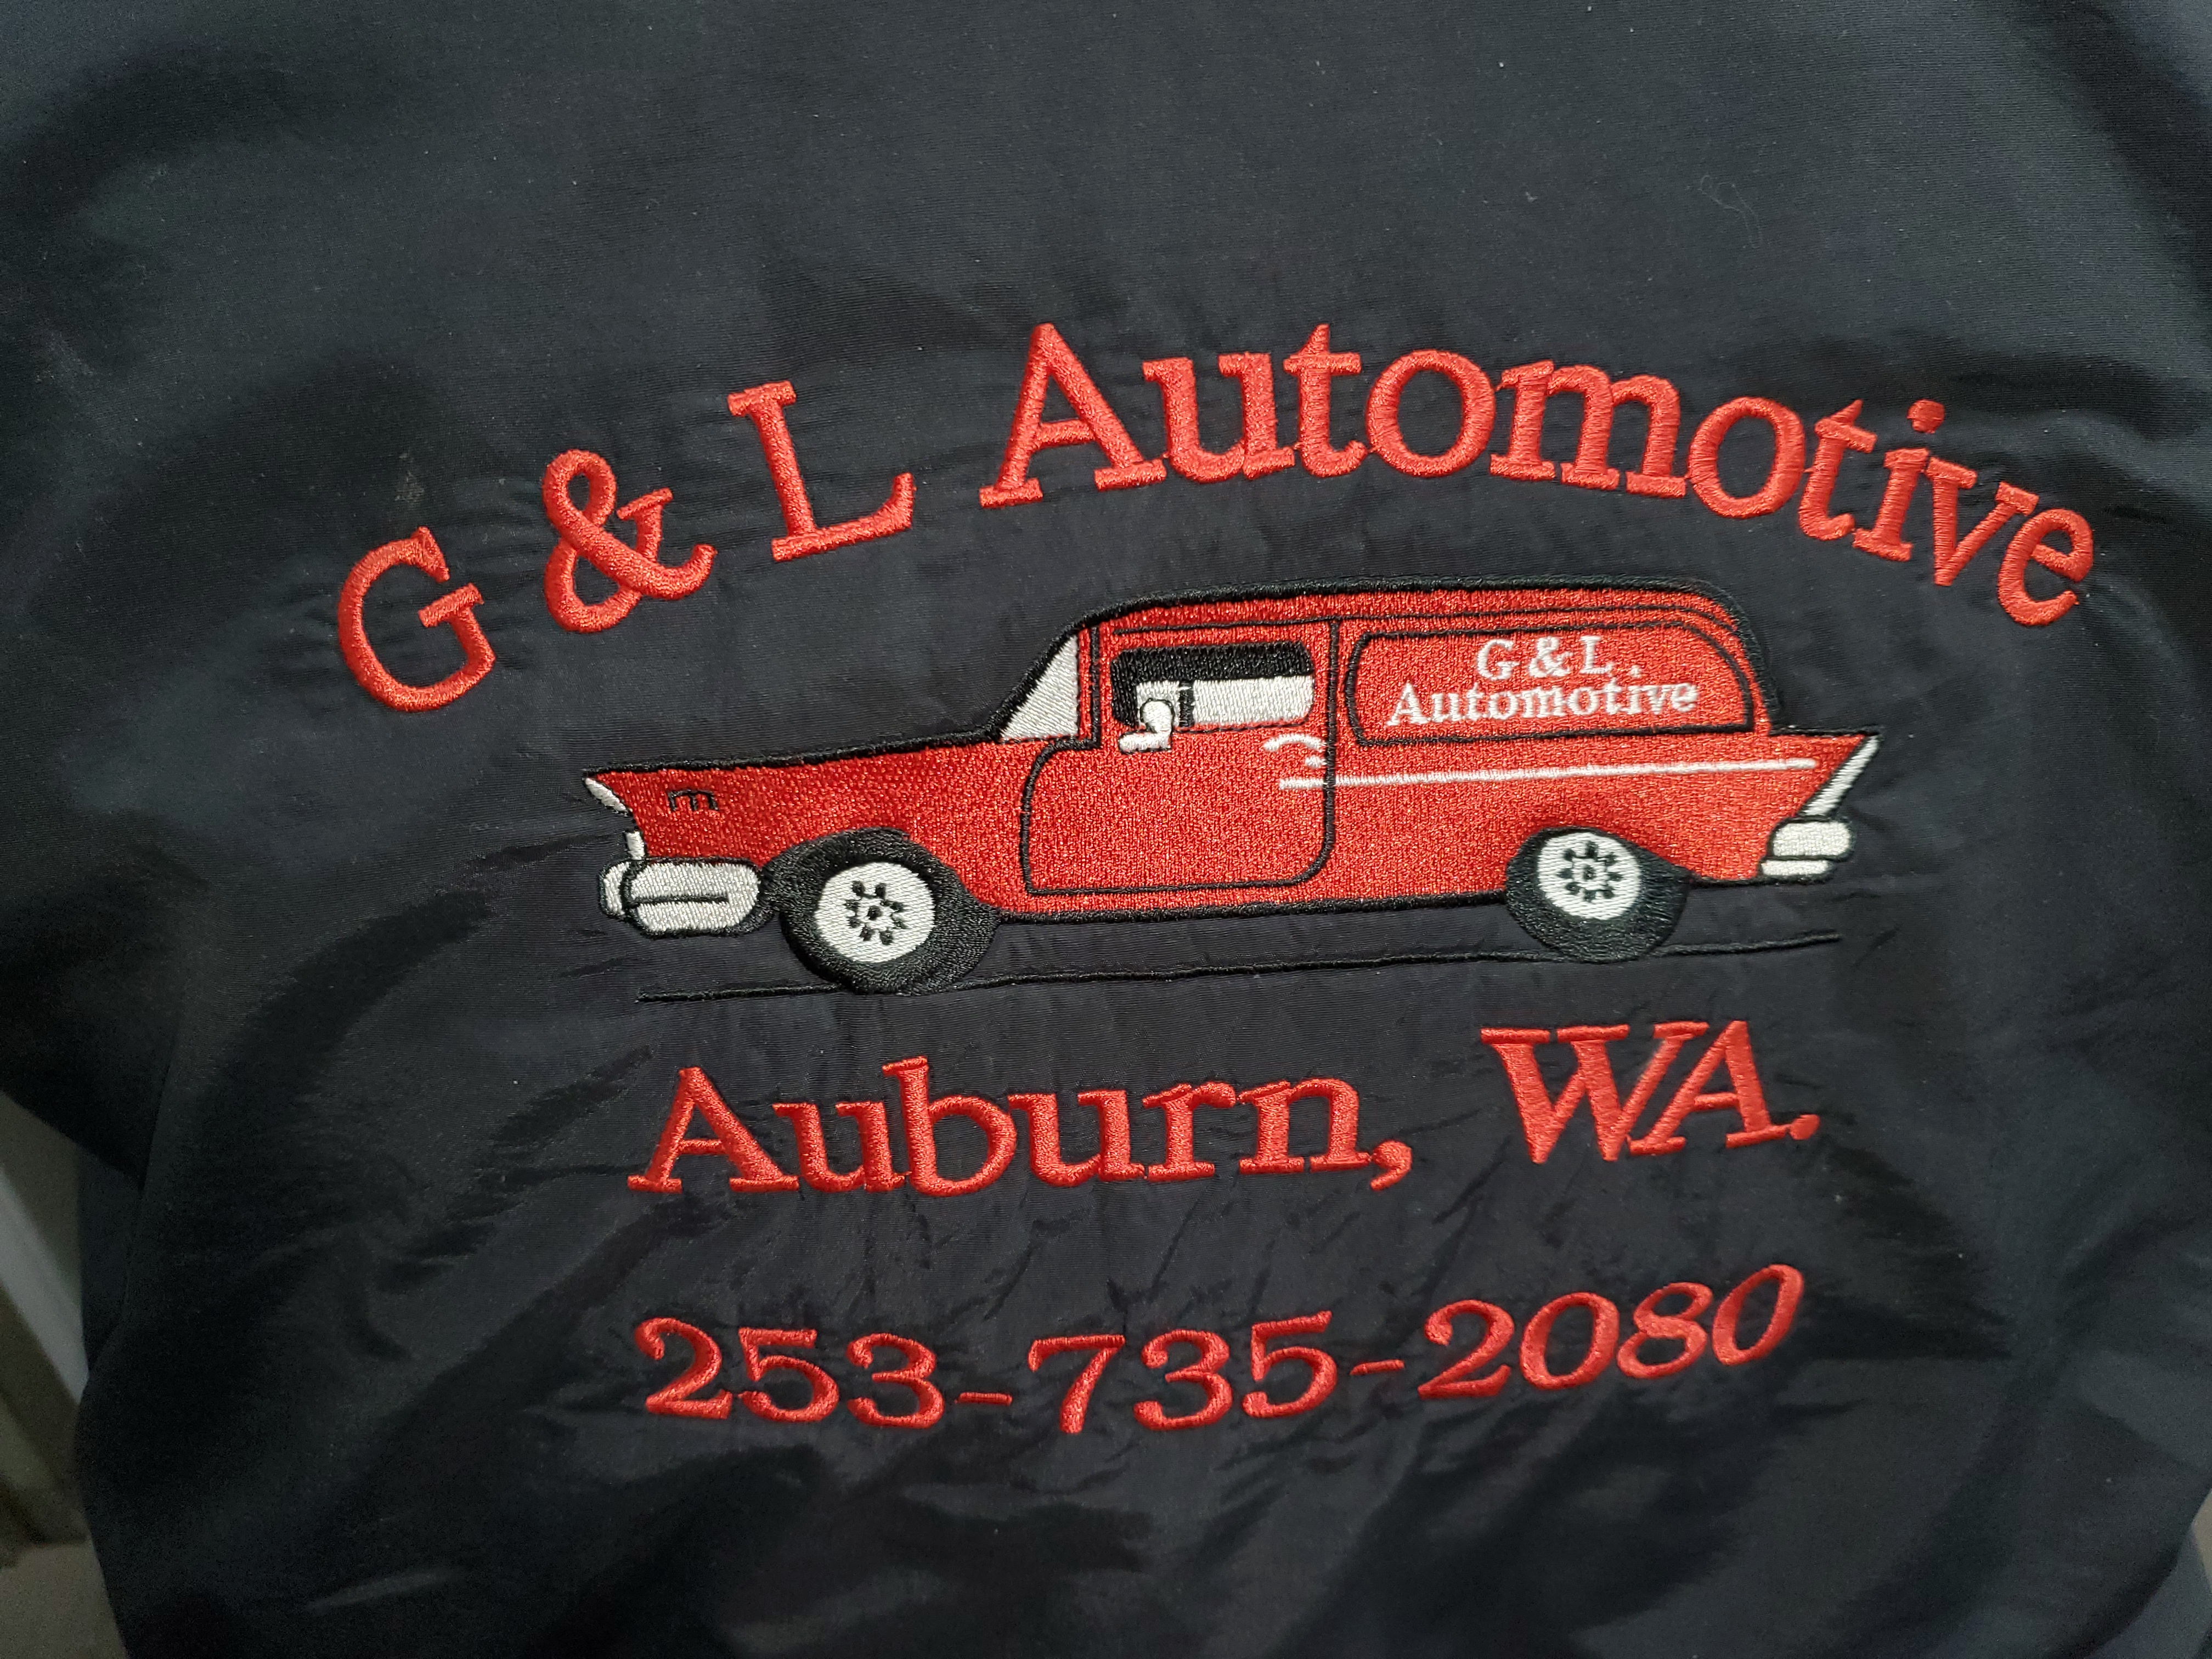 G & L Automotive Repair